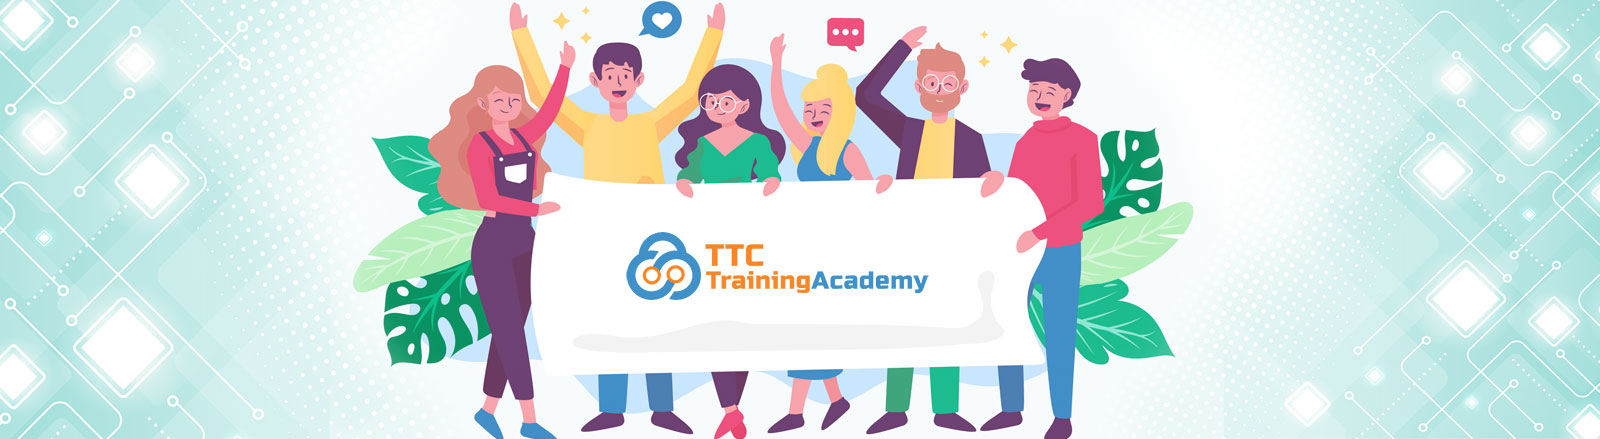 About ttc training academy